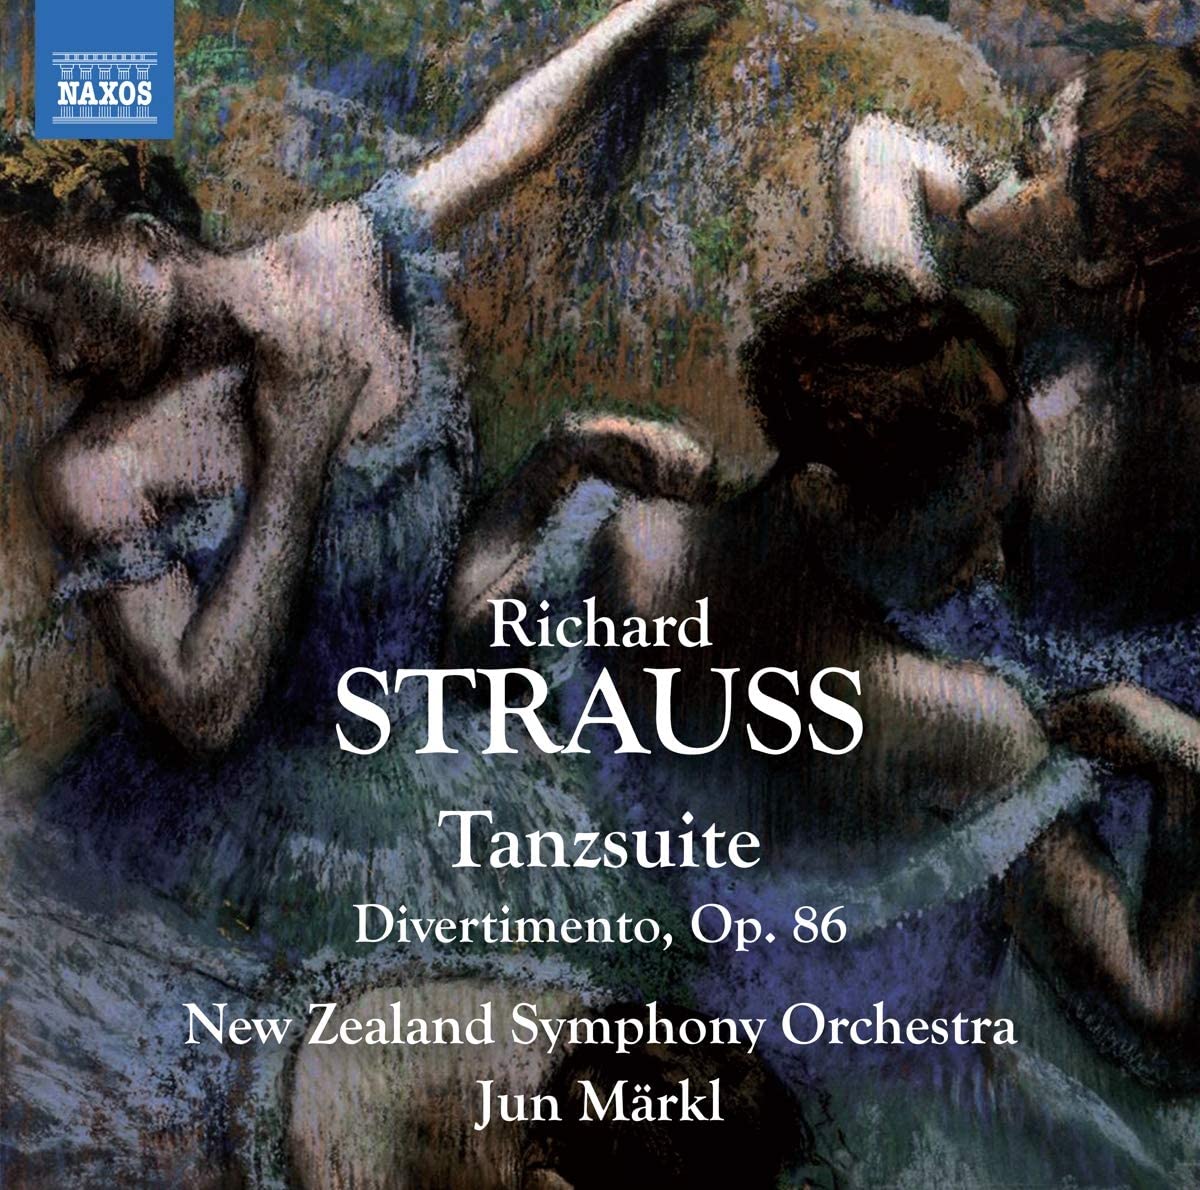 Strauss: Tanzsuite (Dance Suite); Divertimento, Op. 86 | New Zealand Symphony Orchestra, Jun Markl